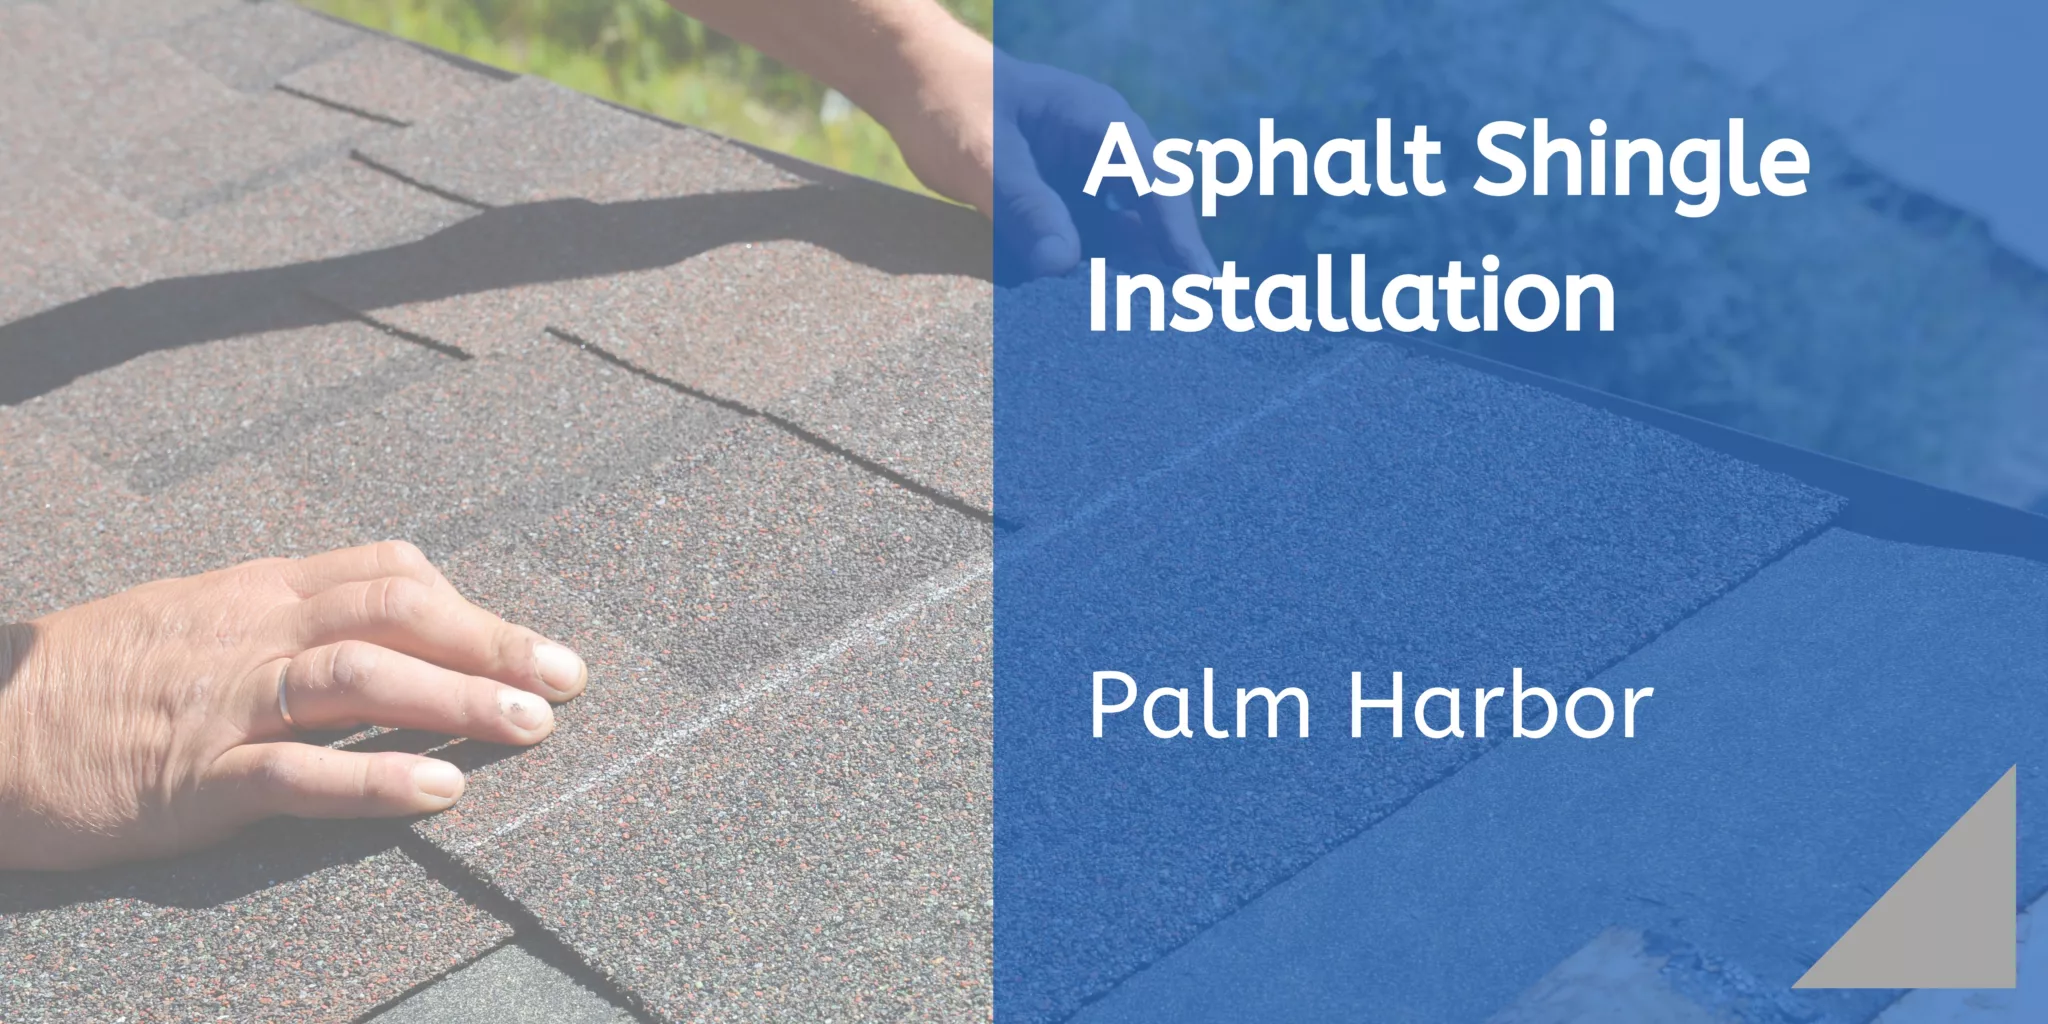 Asphalt shingle installation Palm Harbor